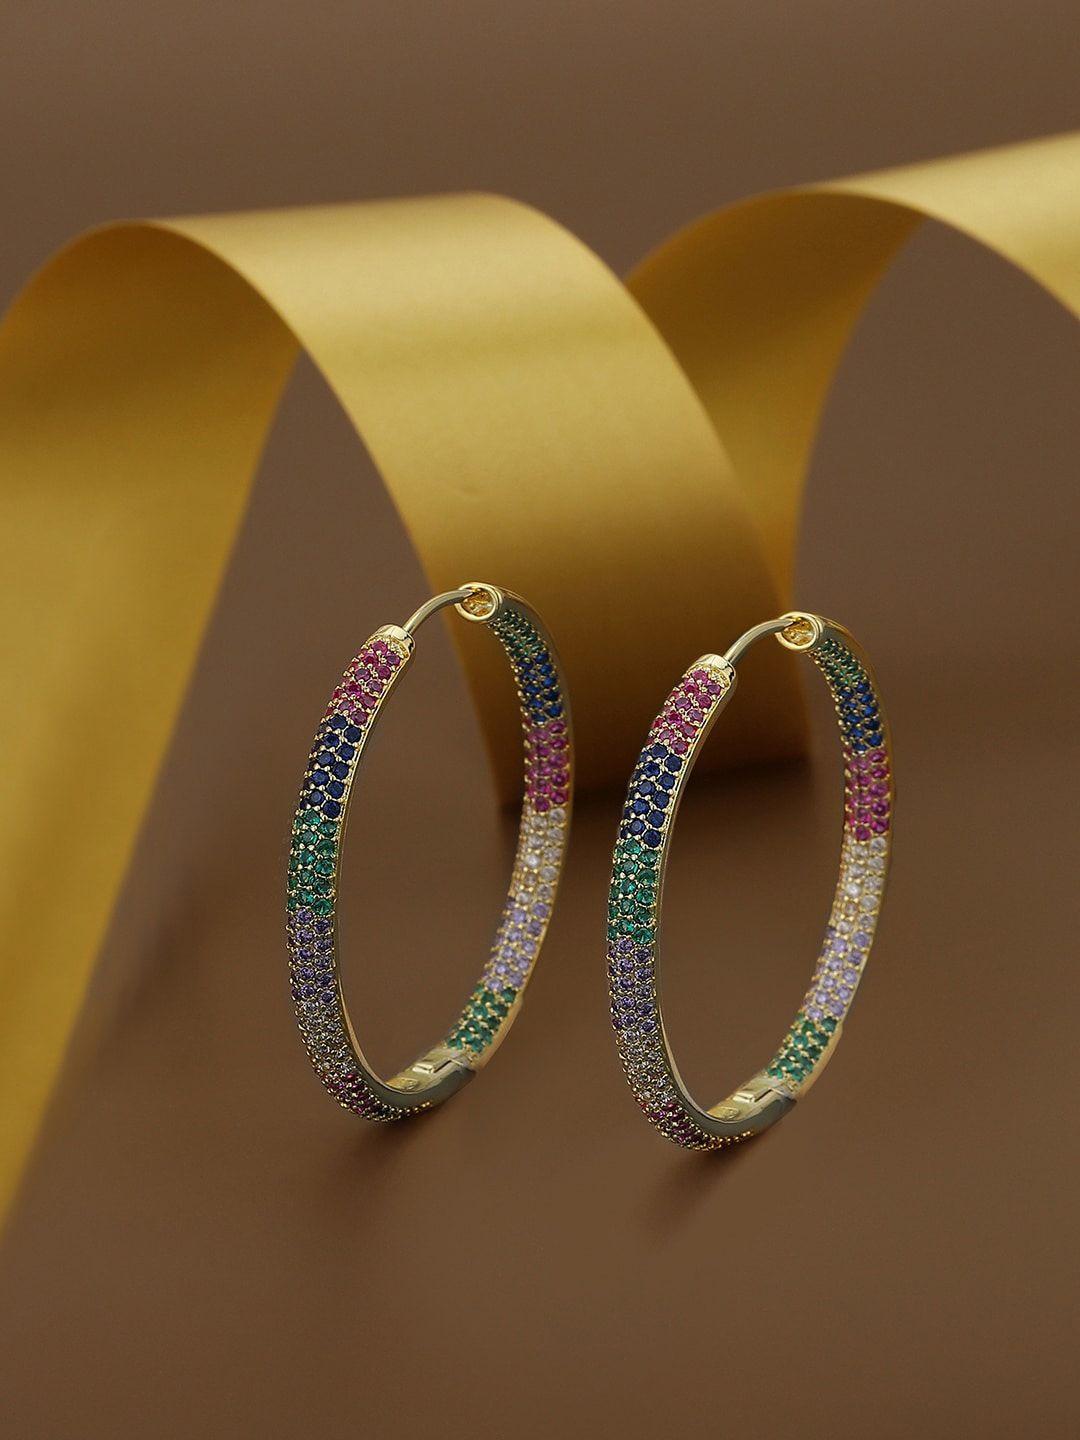 carlton london gold-plated circular hoop earrings